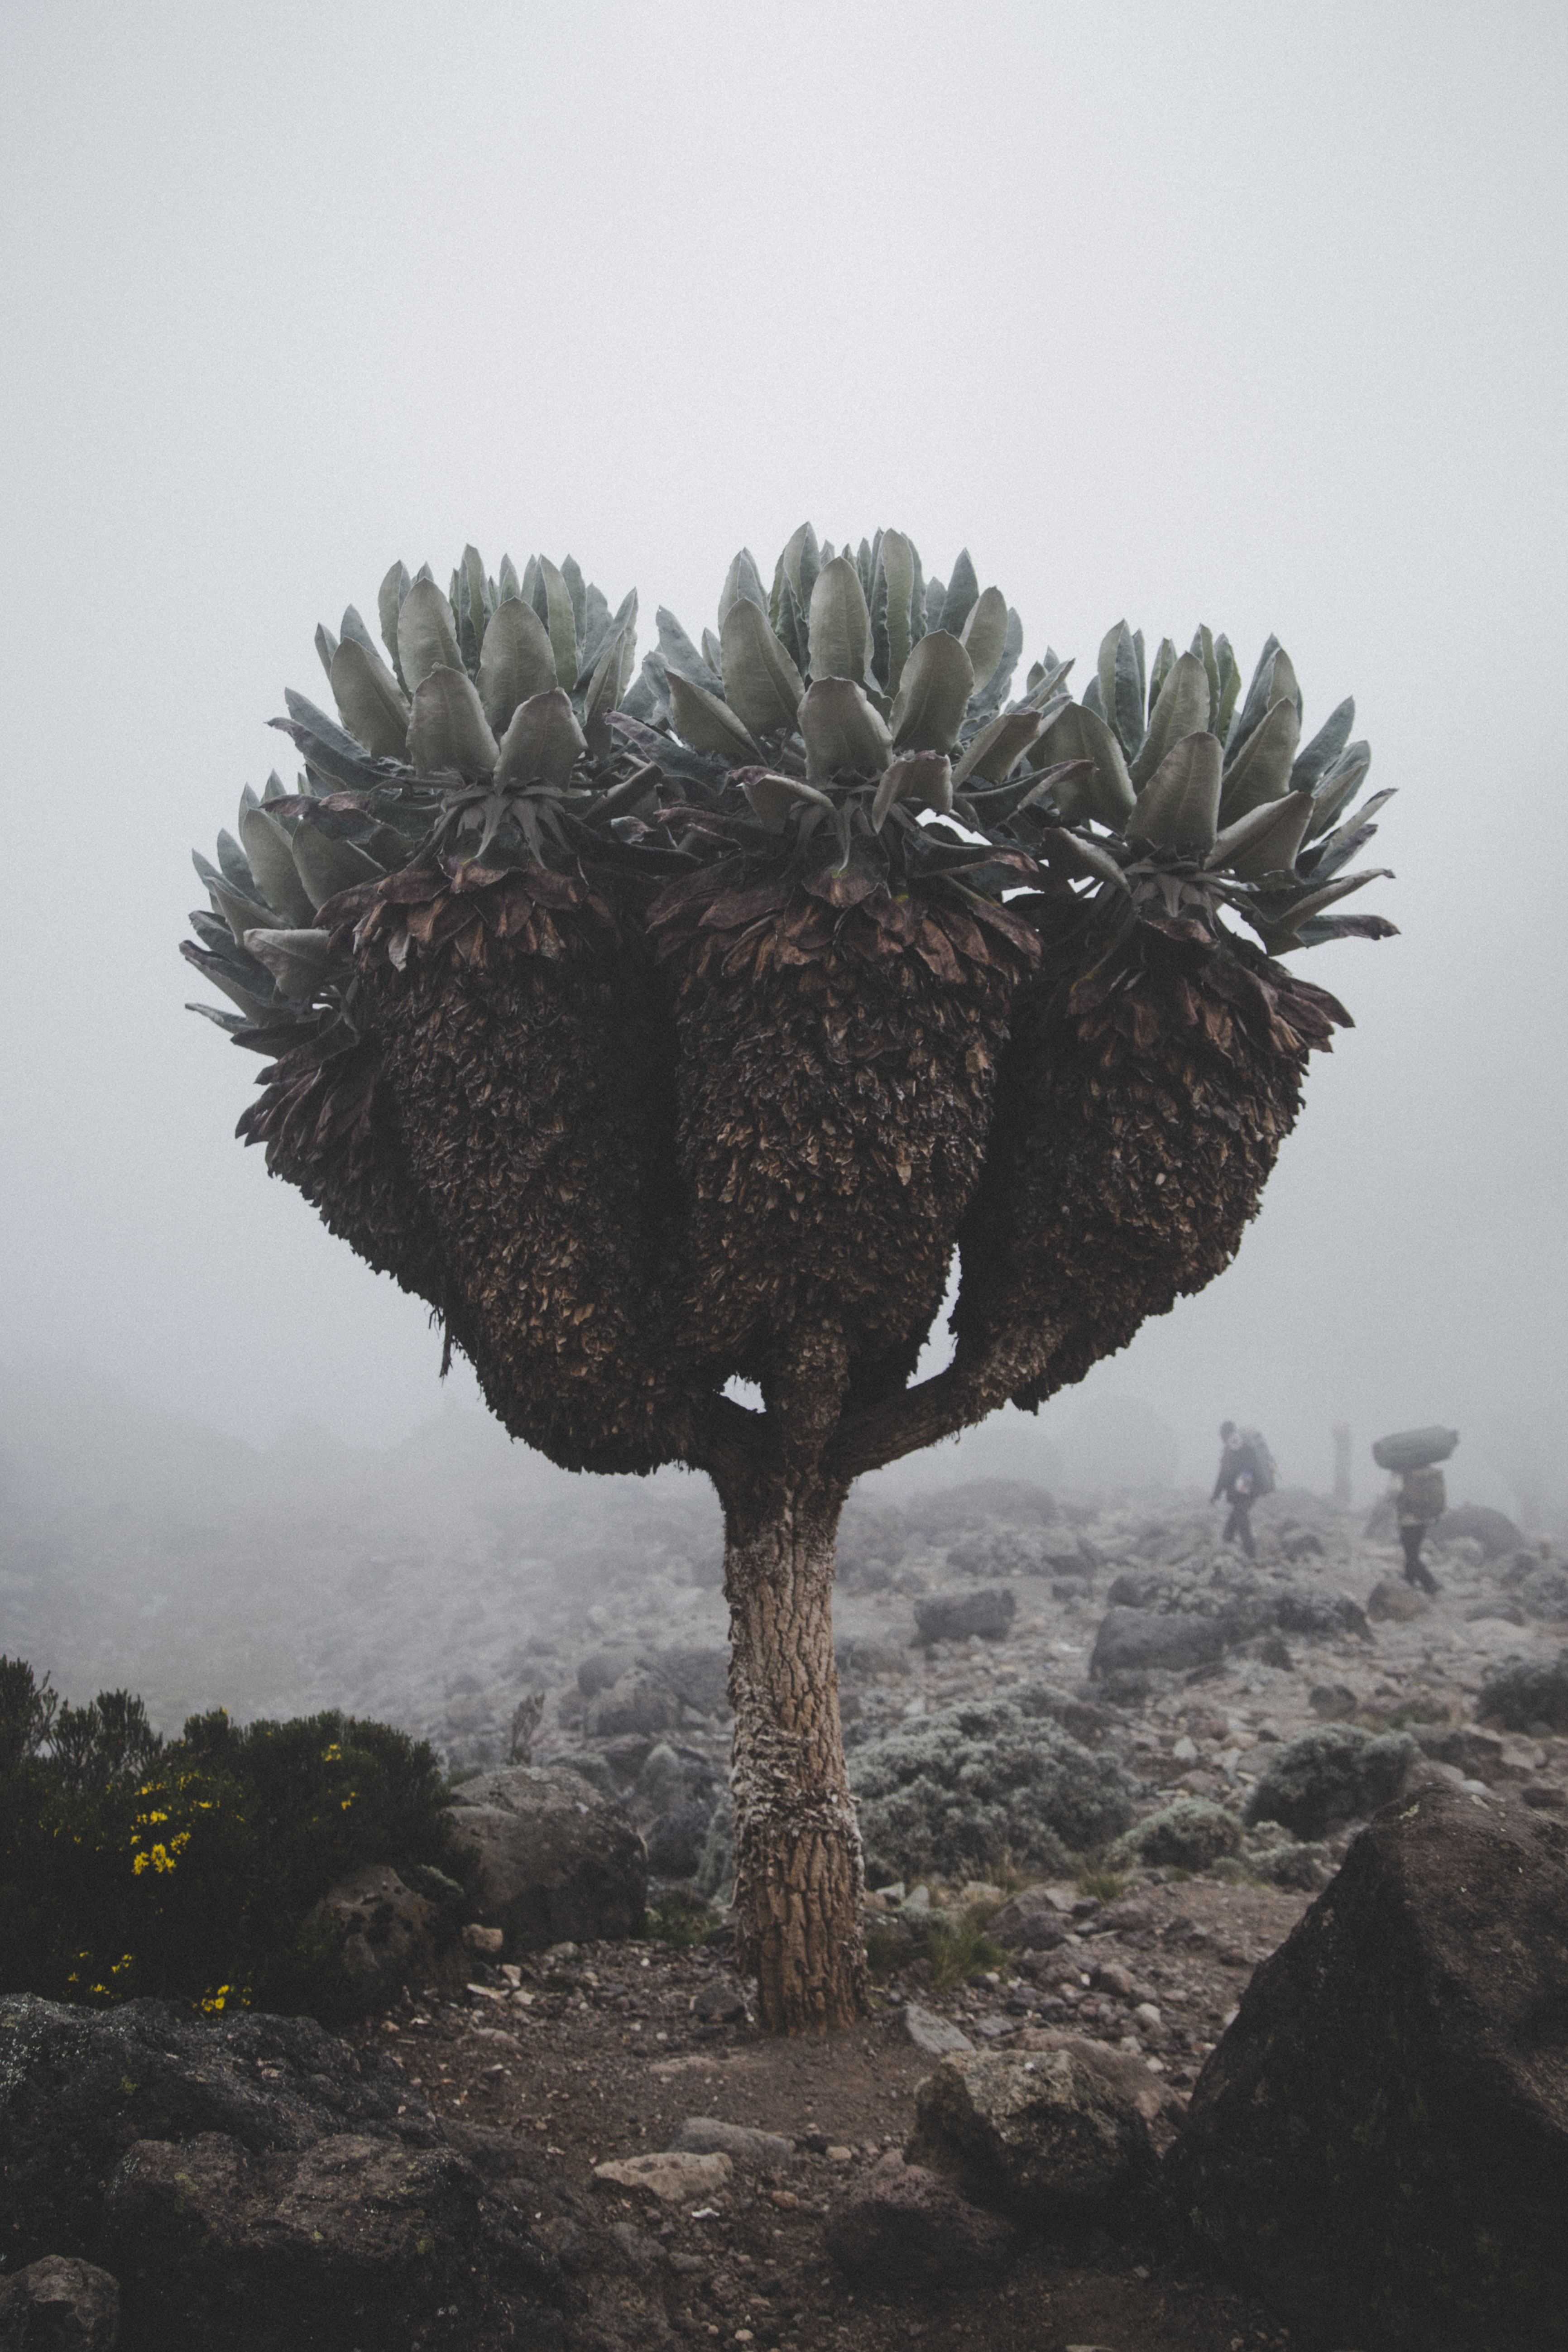 A senecio tree on the way to Mount Kilimanjaro